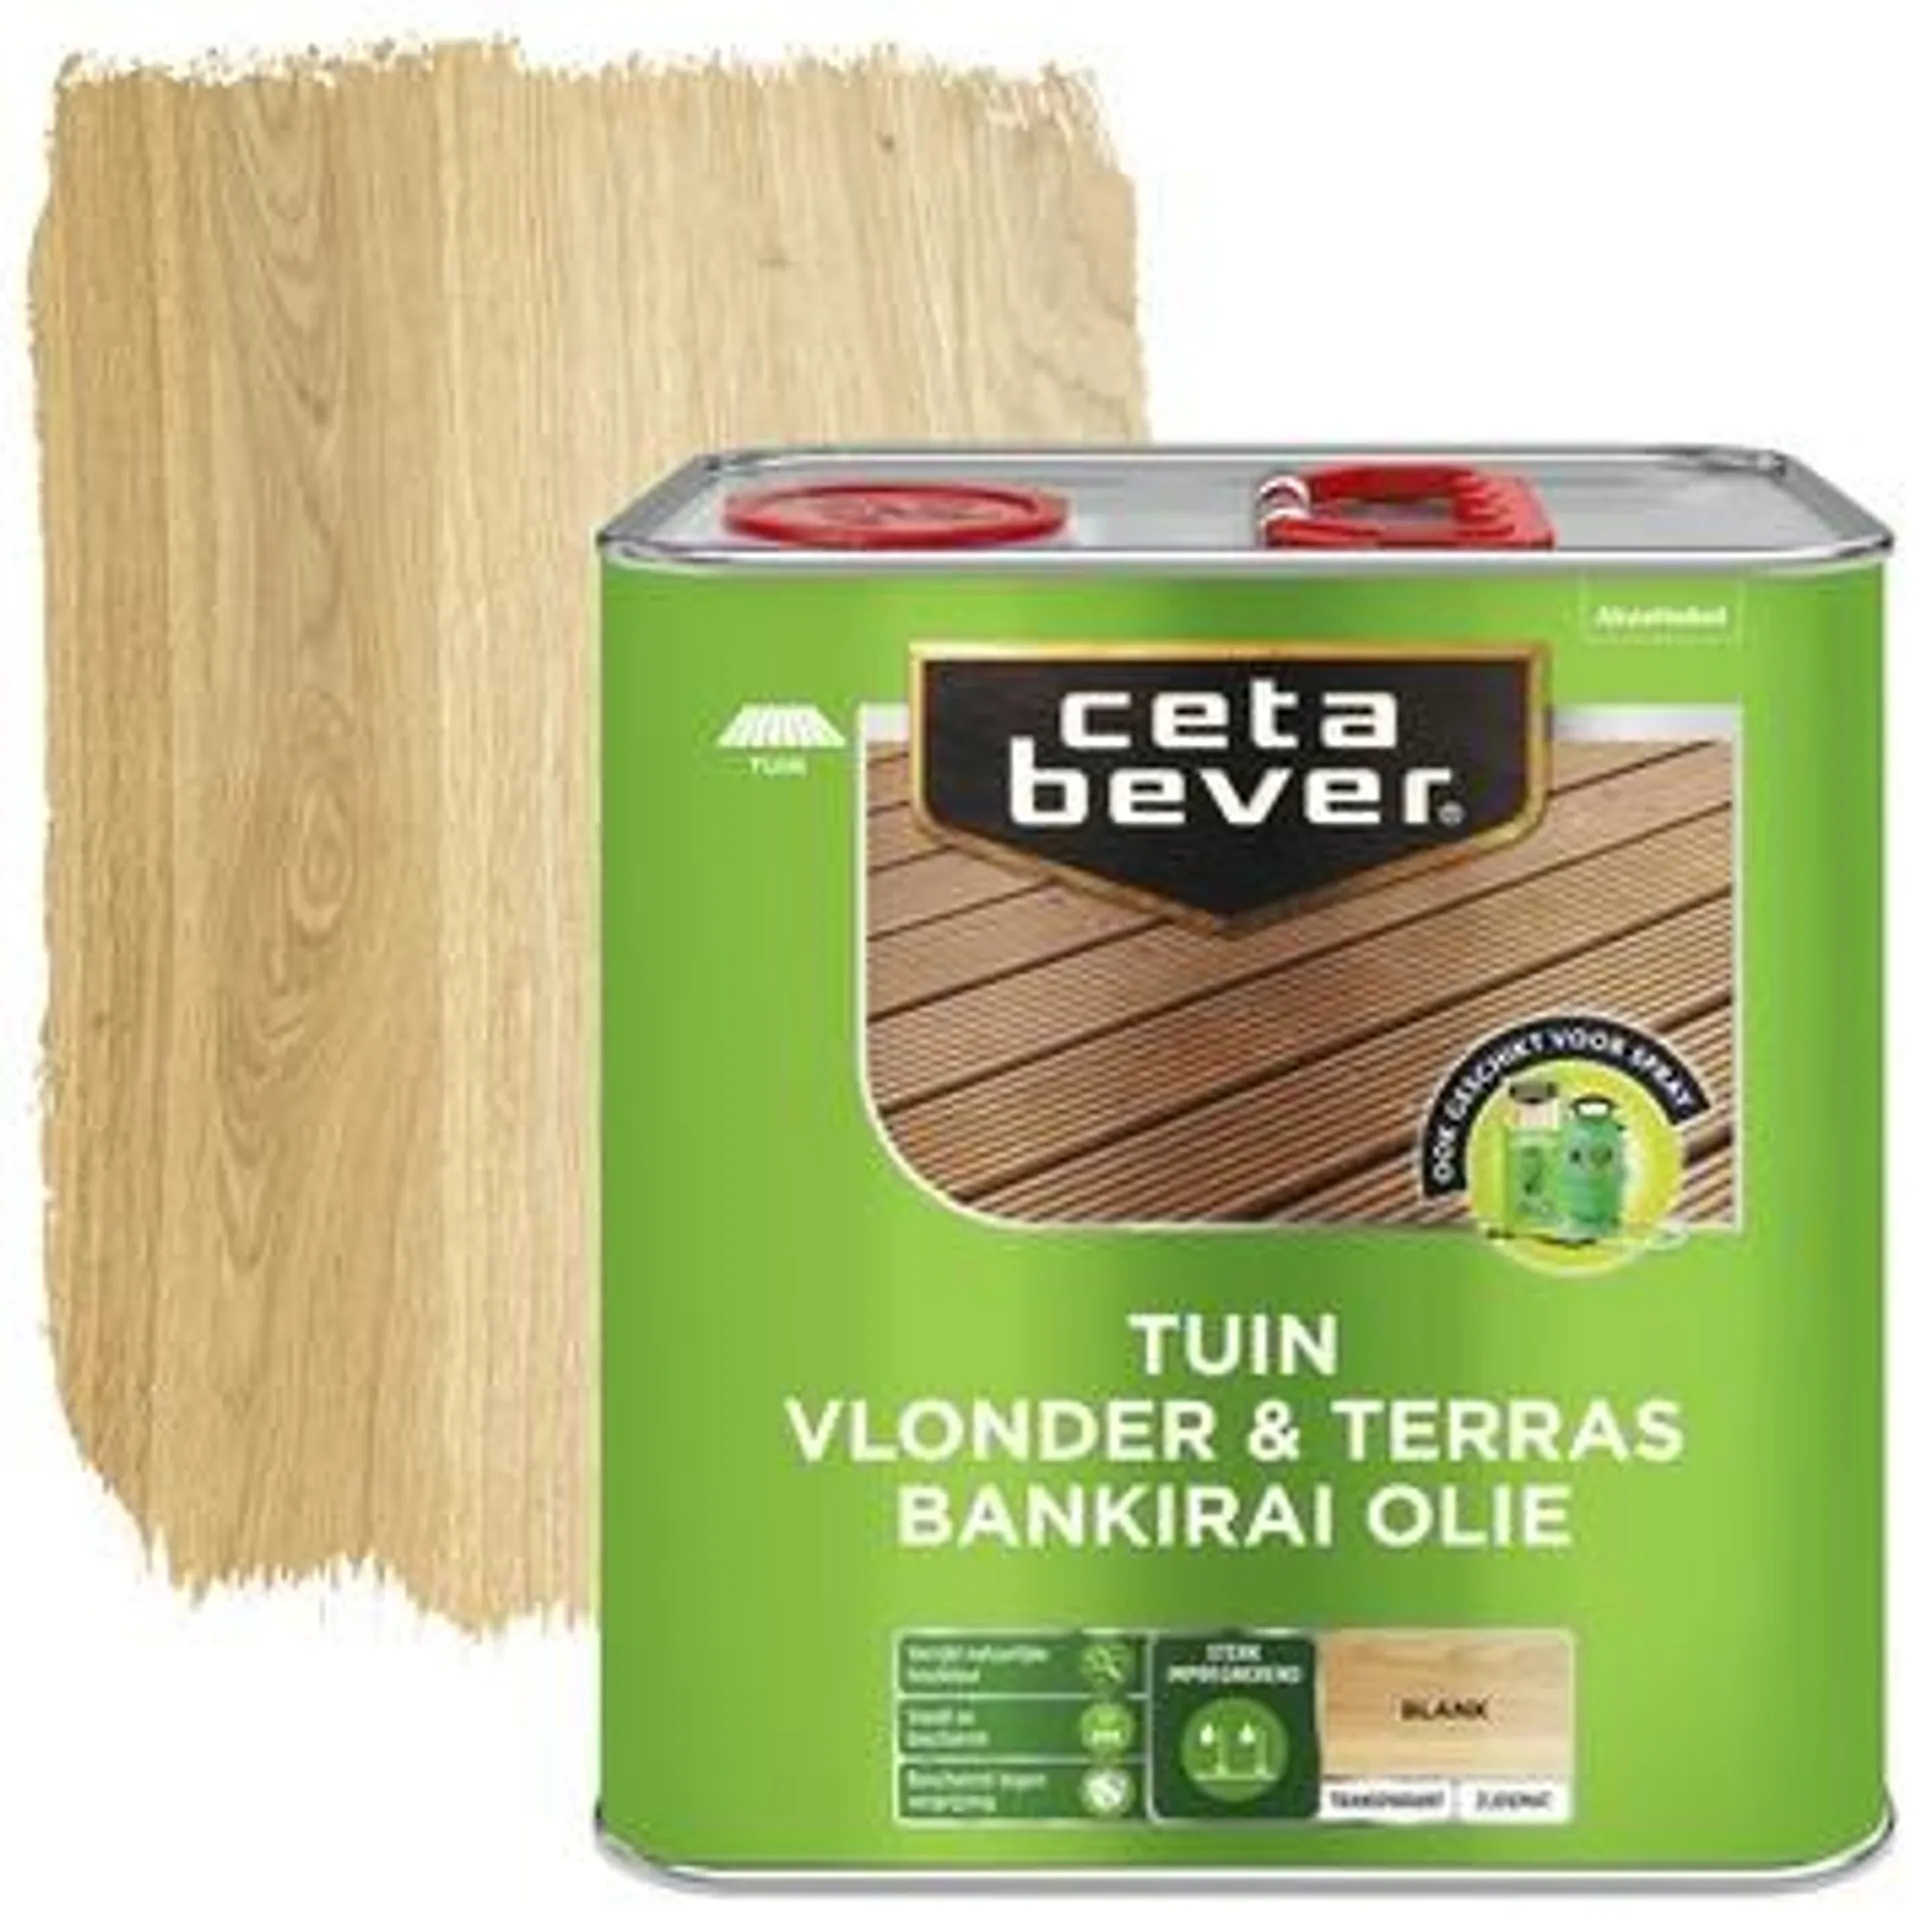 CetaBever Vlonder & Terras olie bankirai 2,5 L